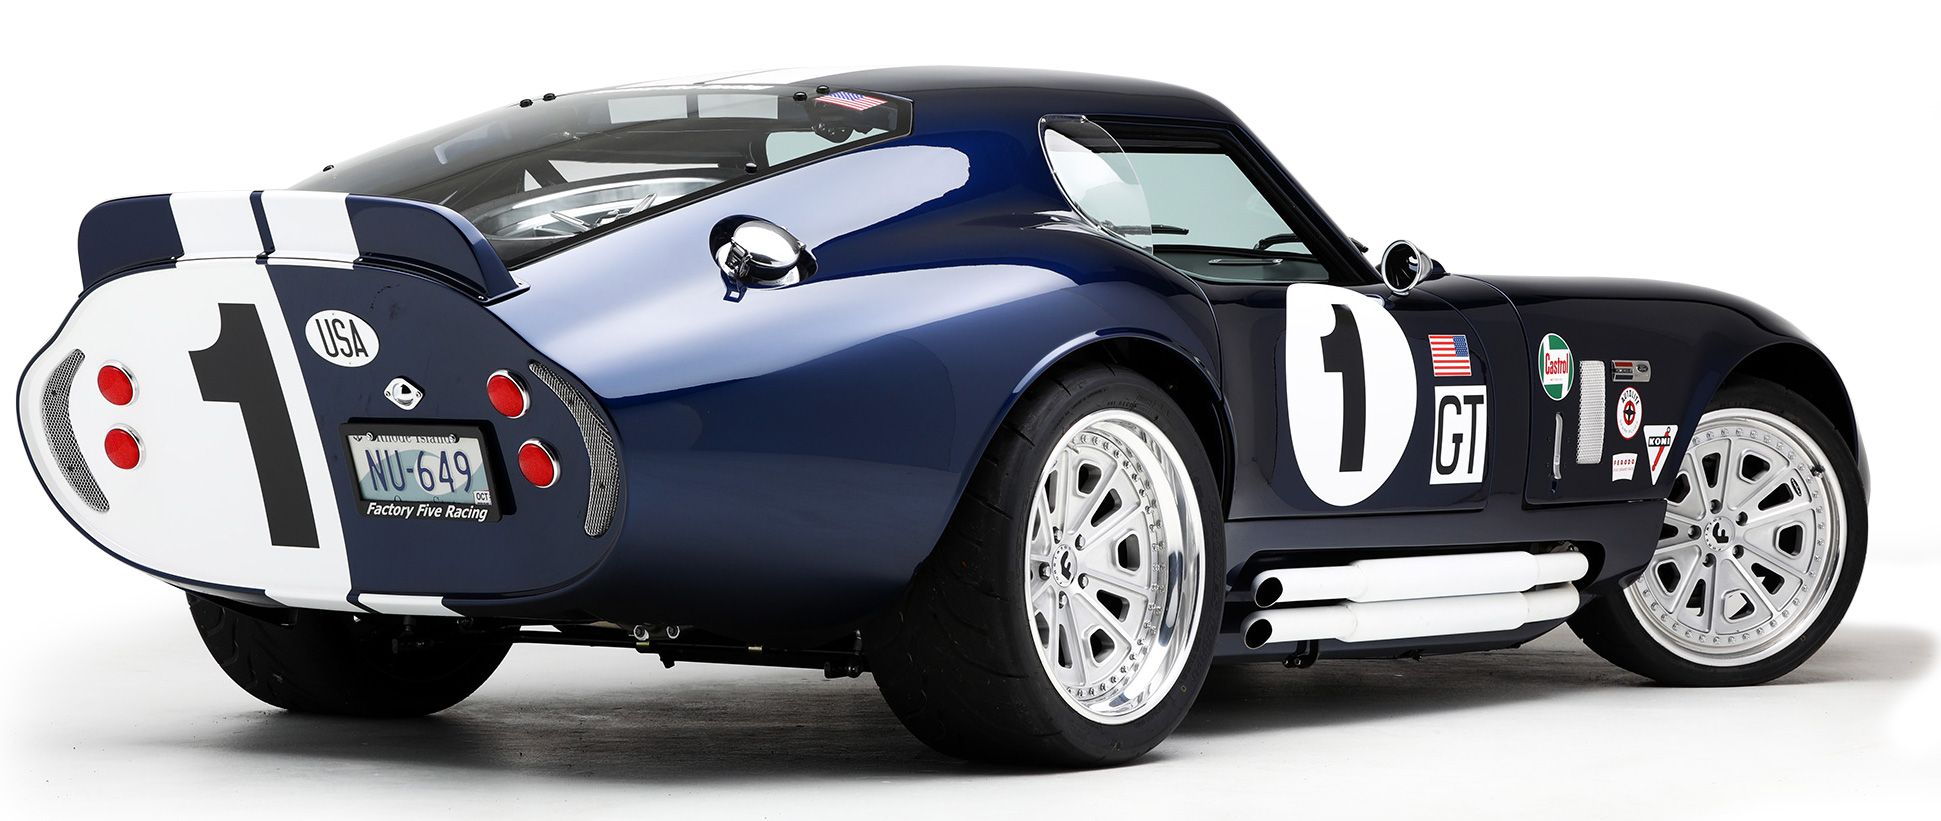 Back angle of Factory Five Racing's Shelby Cobra Daytona Coupe replica